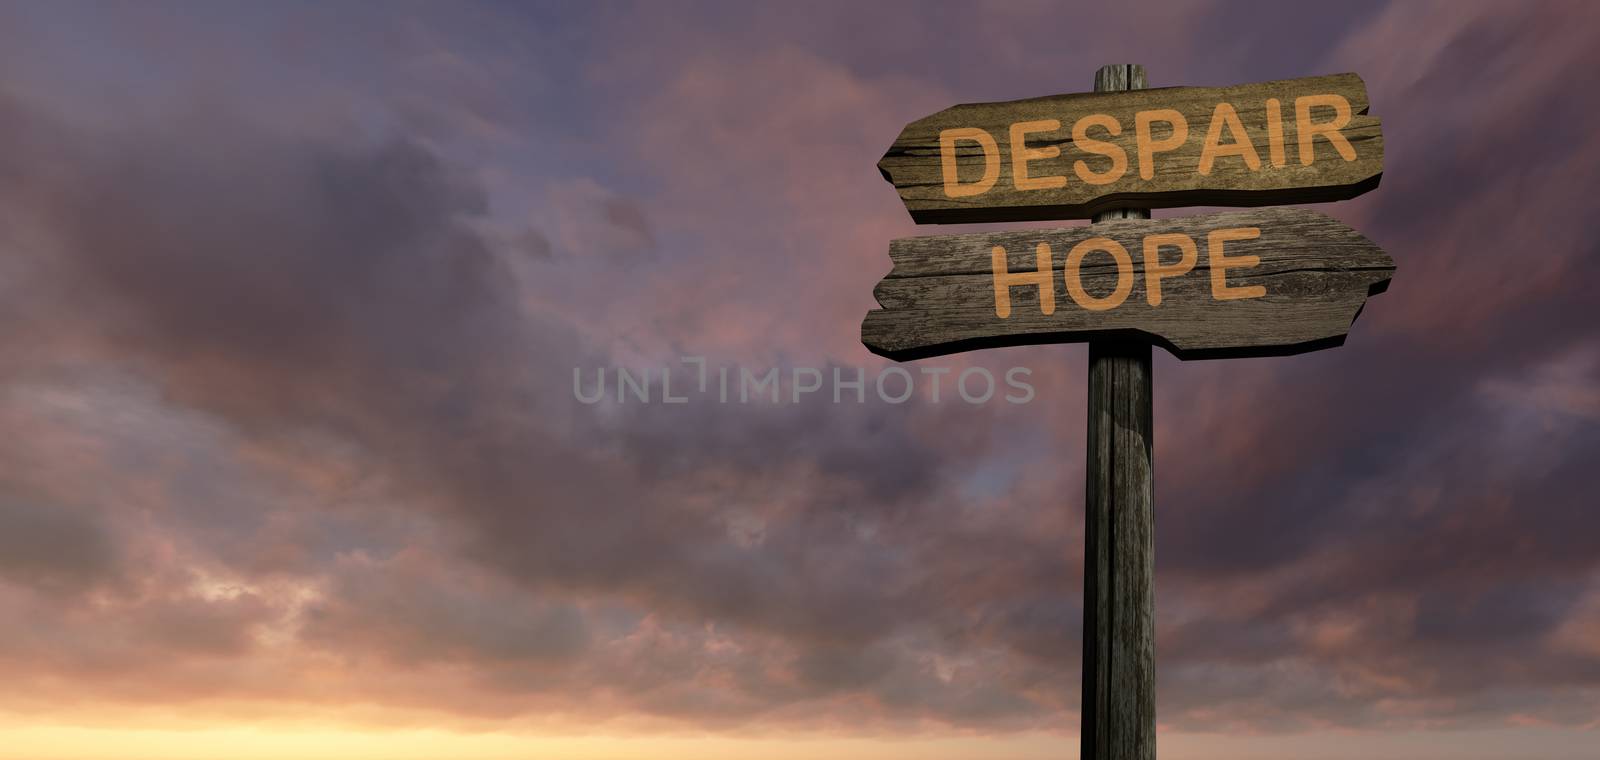 DESPAIR - HOPE by vitanovski